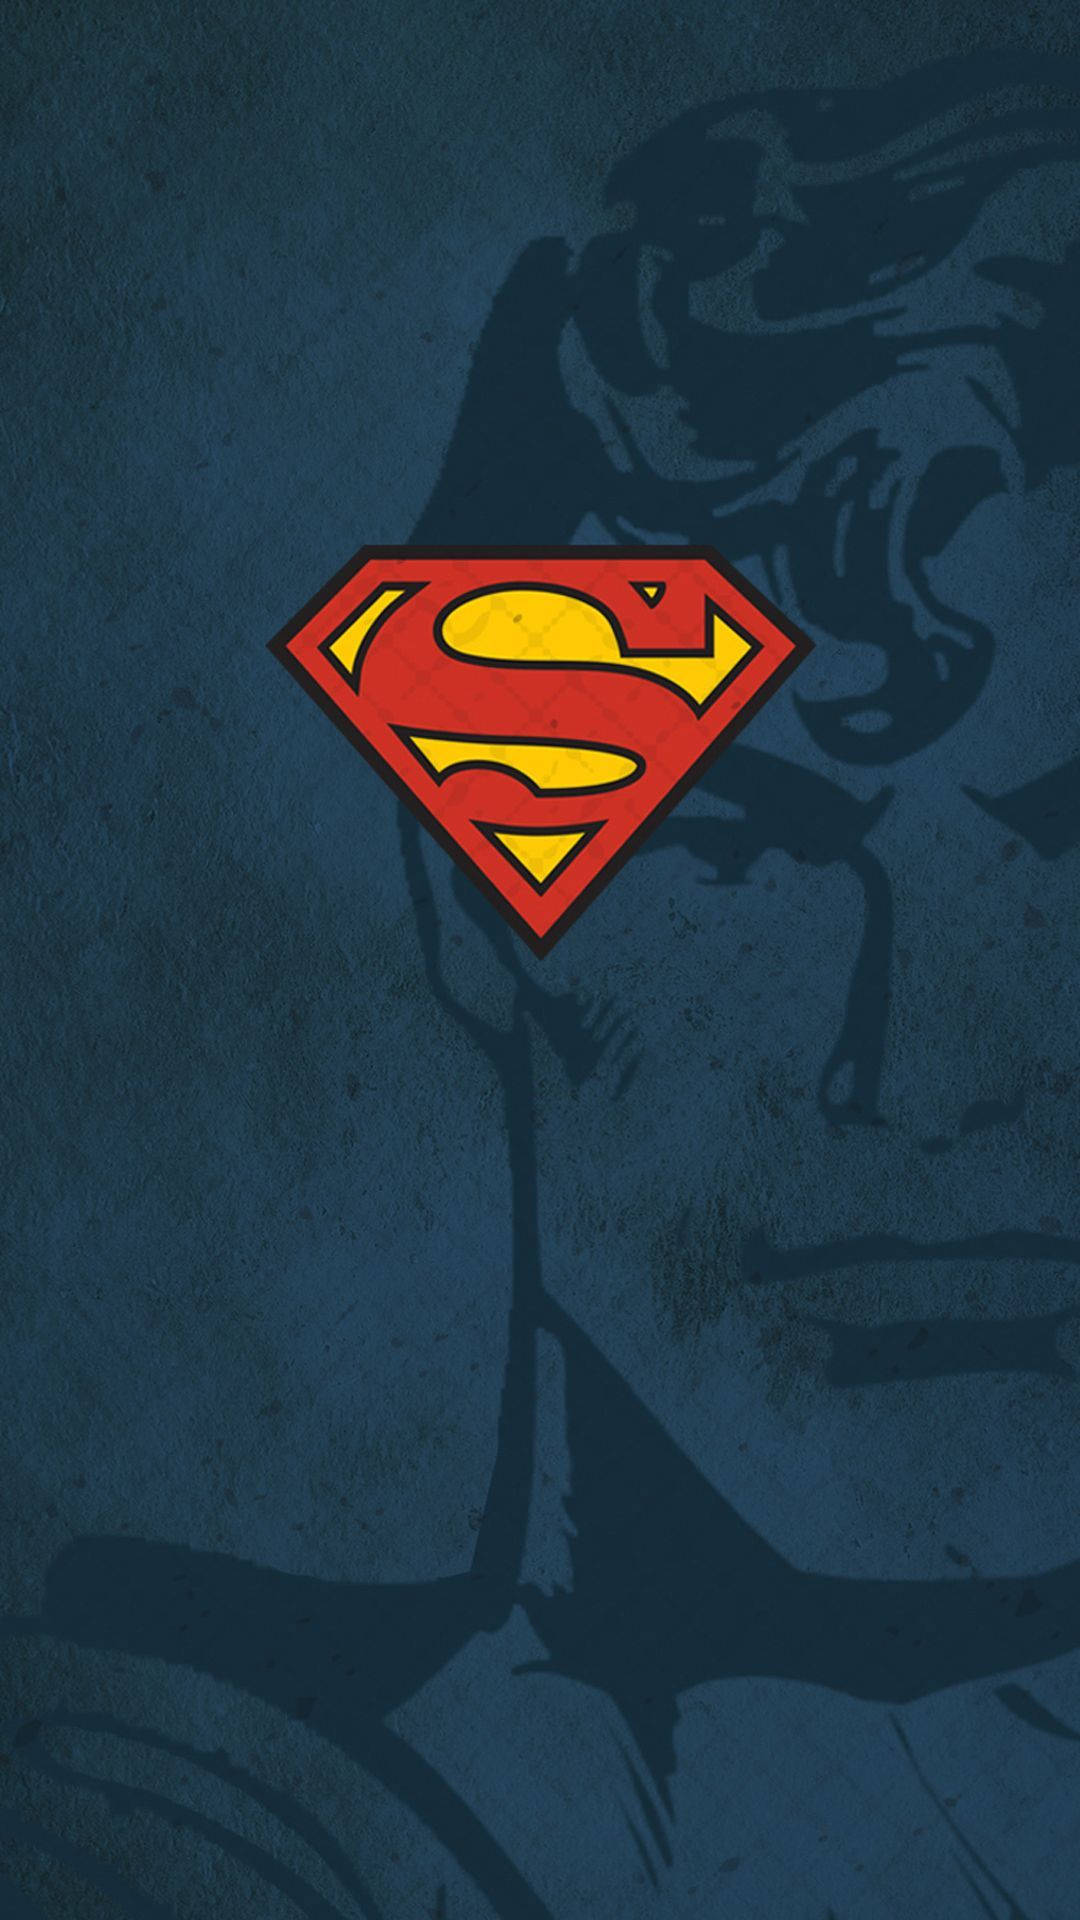 Free Superman Symbol iPhone Wallpaper Downloads, Superman Symbol iPhone Wallpaper for FREE